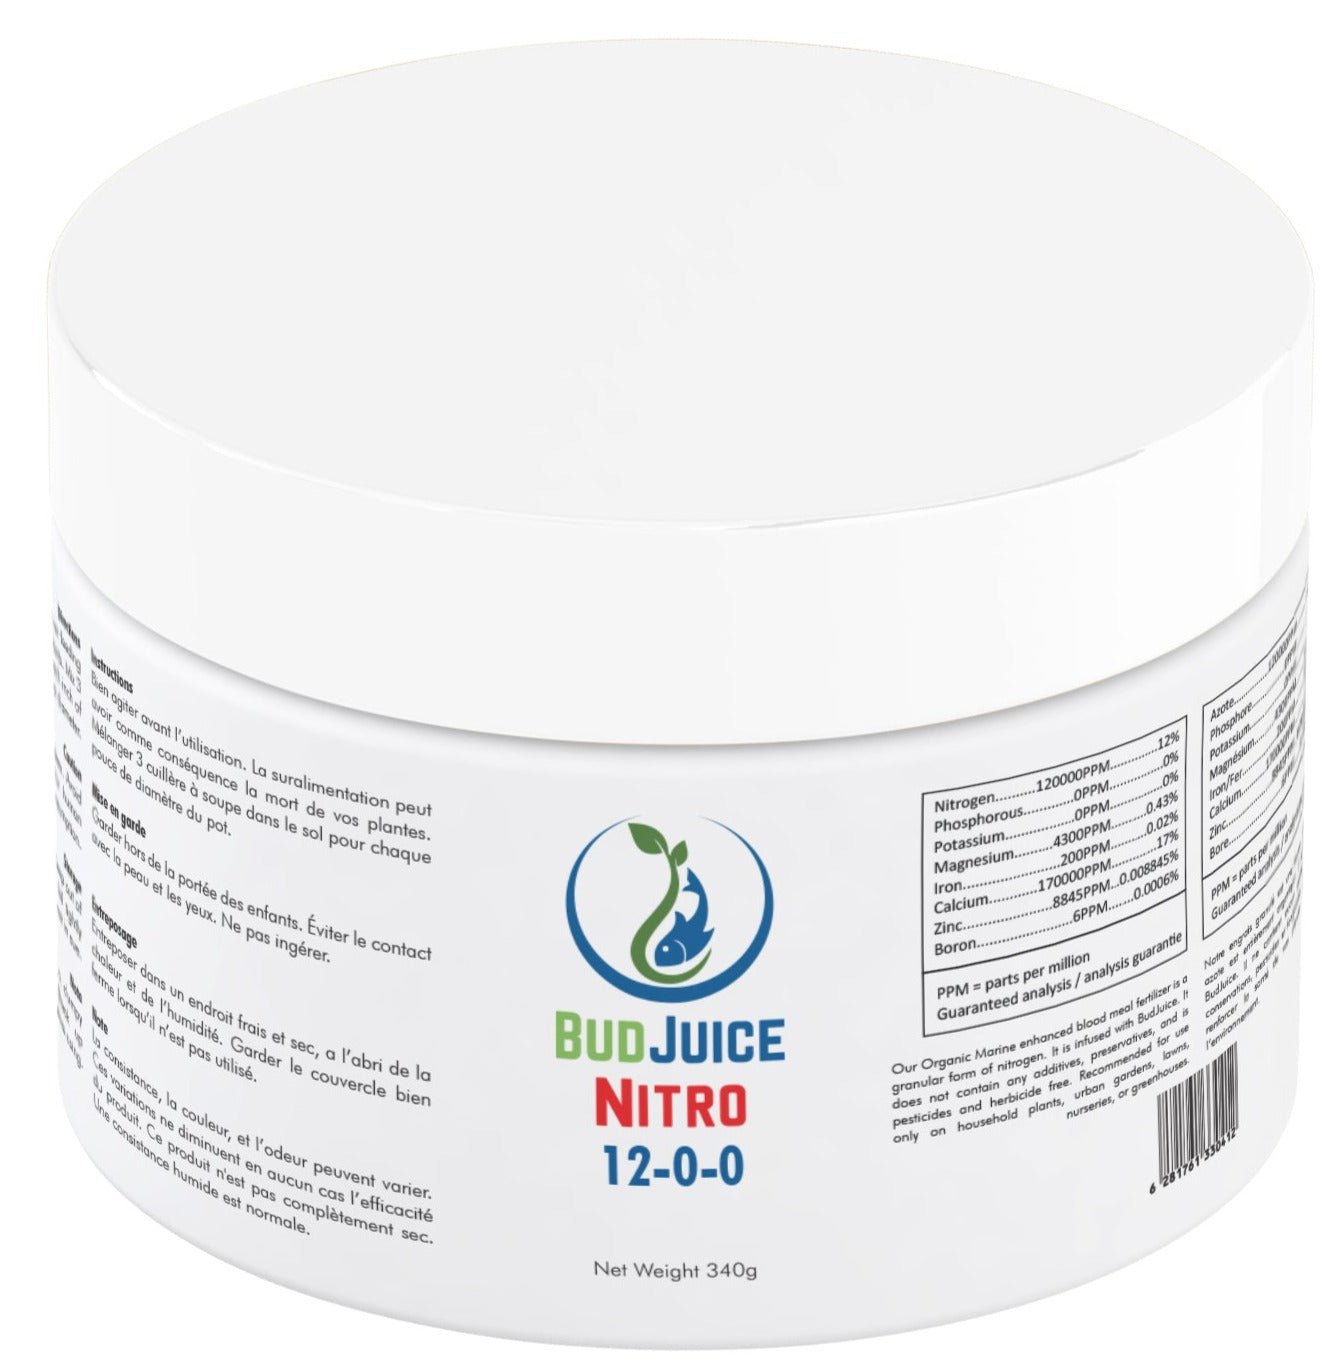 BudJuice - Nitro 12-0-0 Organic Fertilizer Blood Meal based Nitrogen - BudJuice